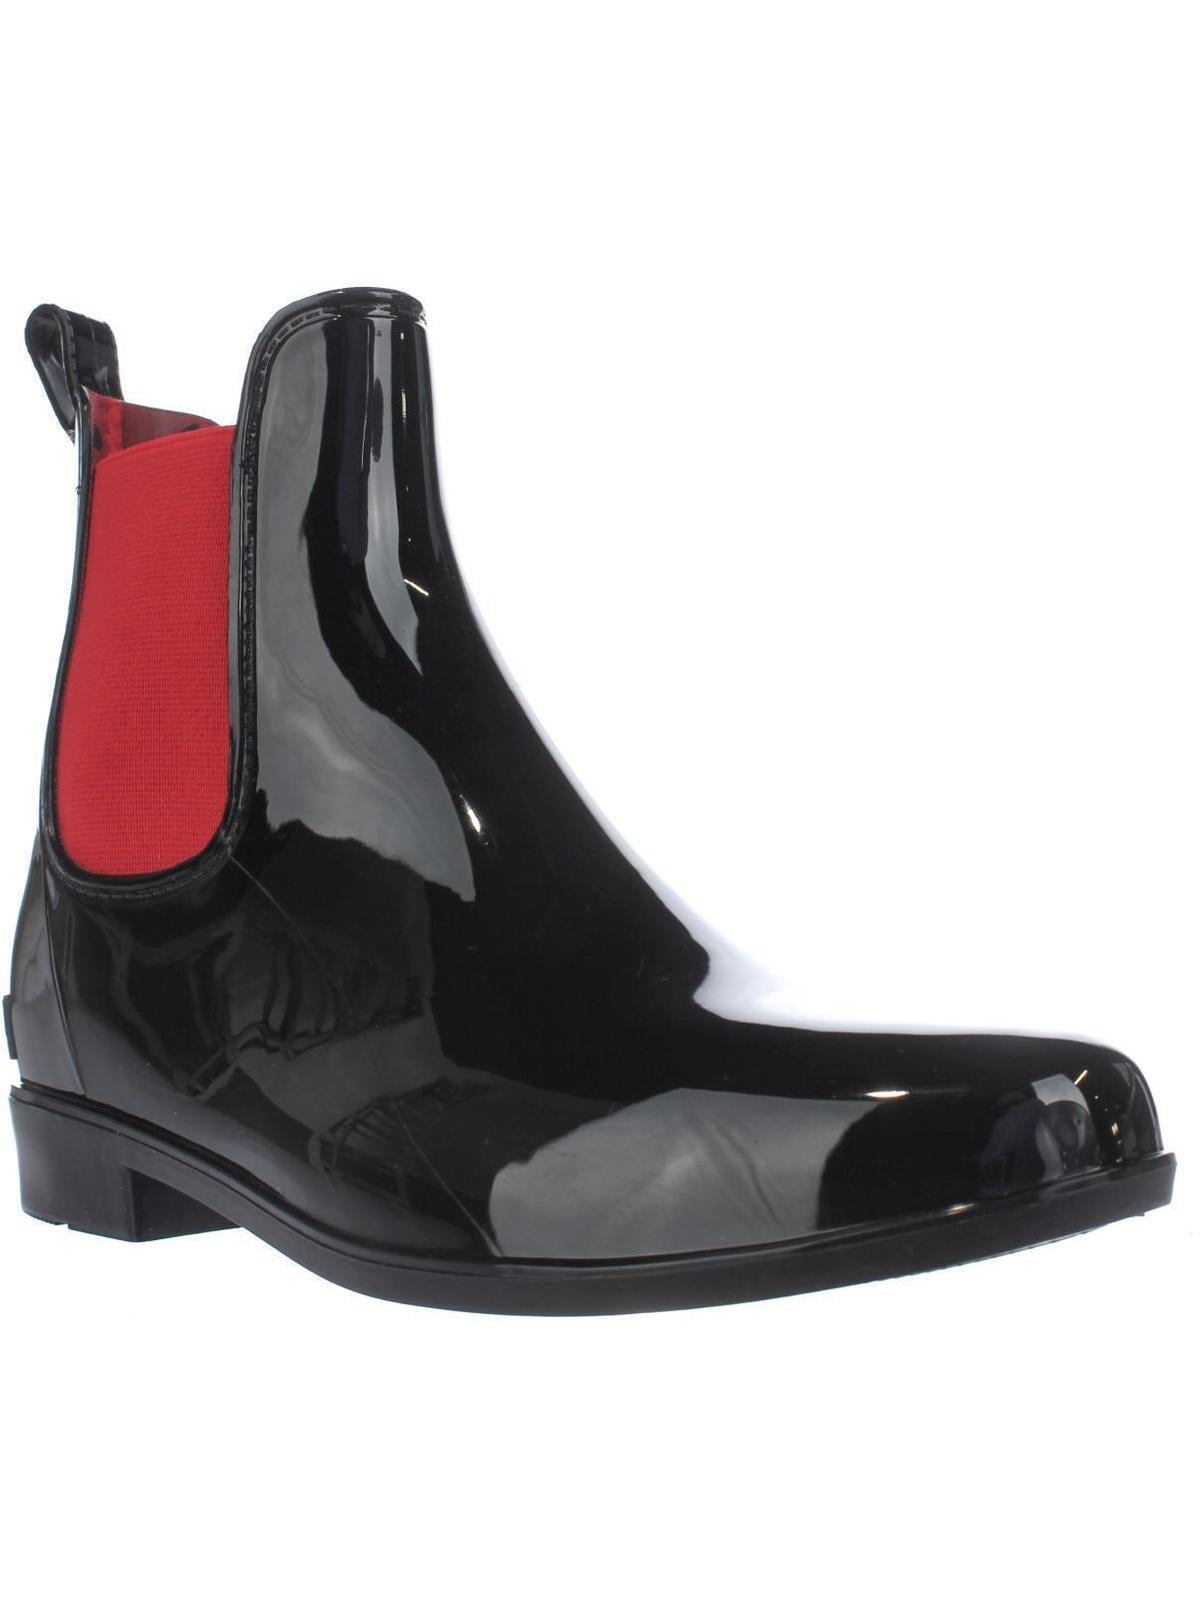 ralph lauren black and red rain boots